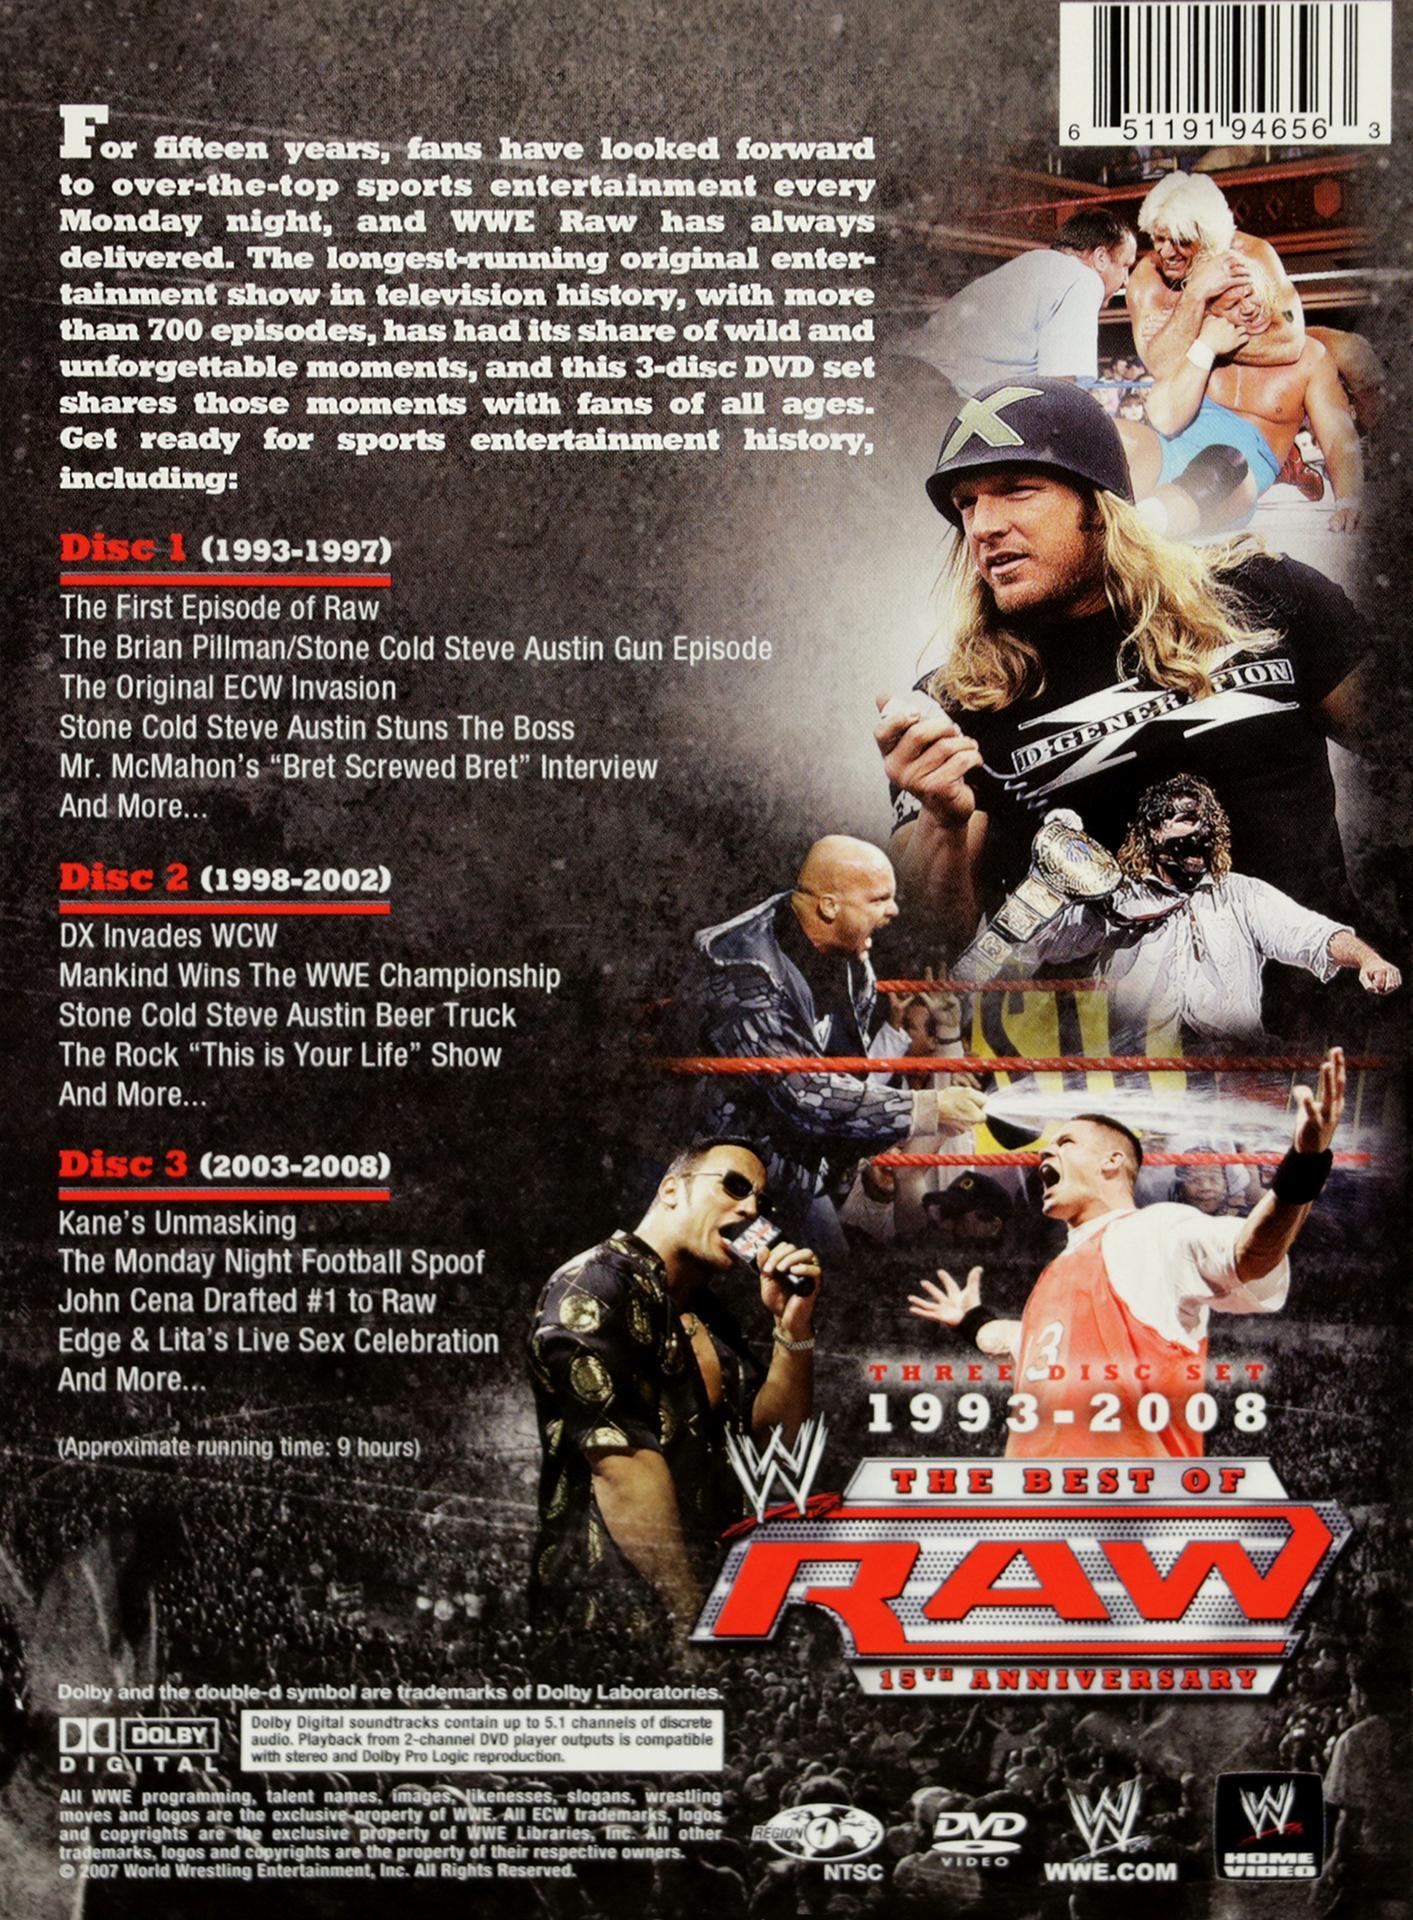 WWE: The Best of RAW: 15th Anniversary DVD (DigiPack)